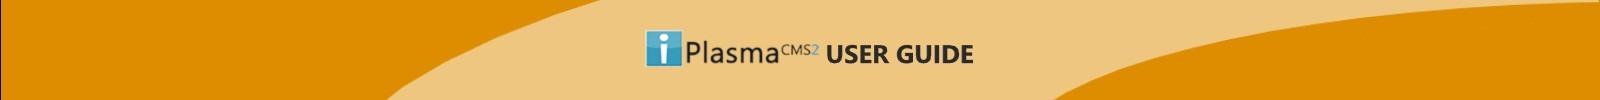 iPlasmaCMS2 User Guide Cover